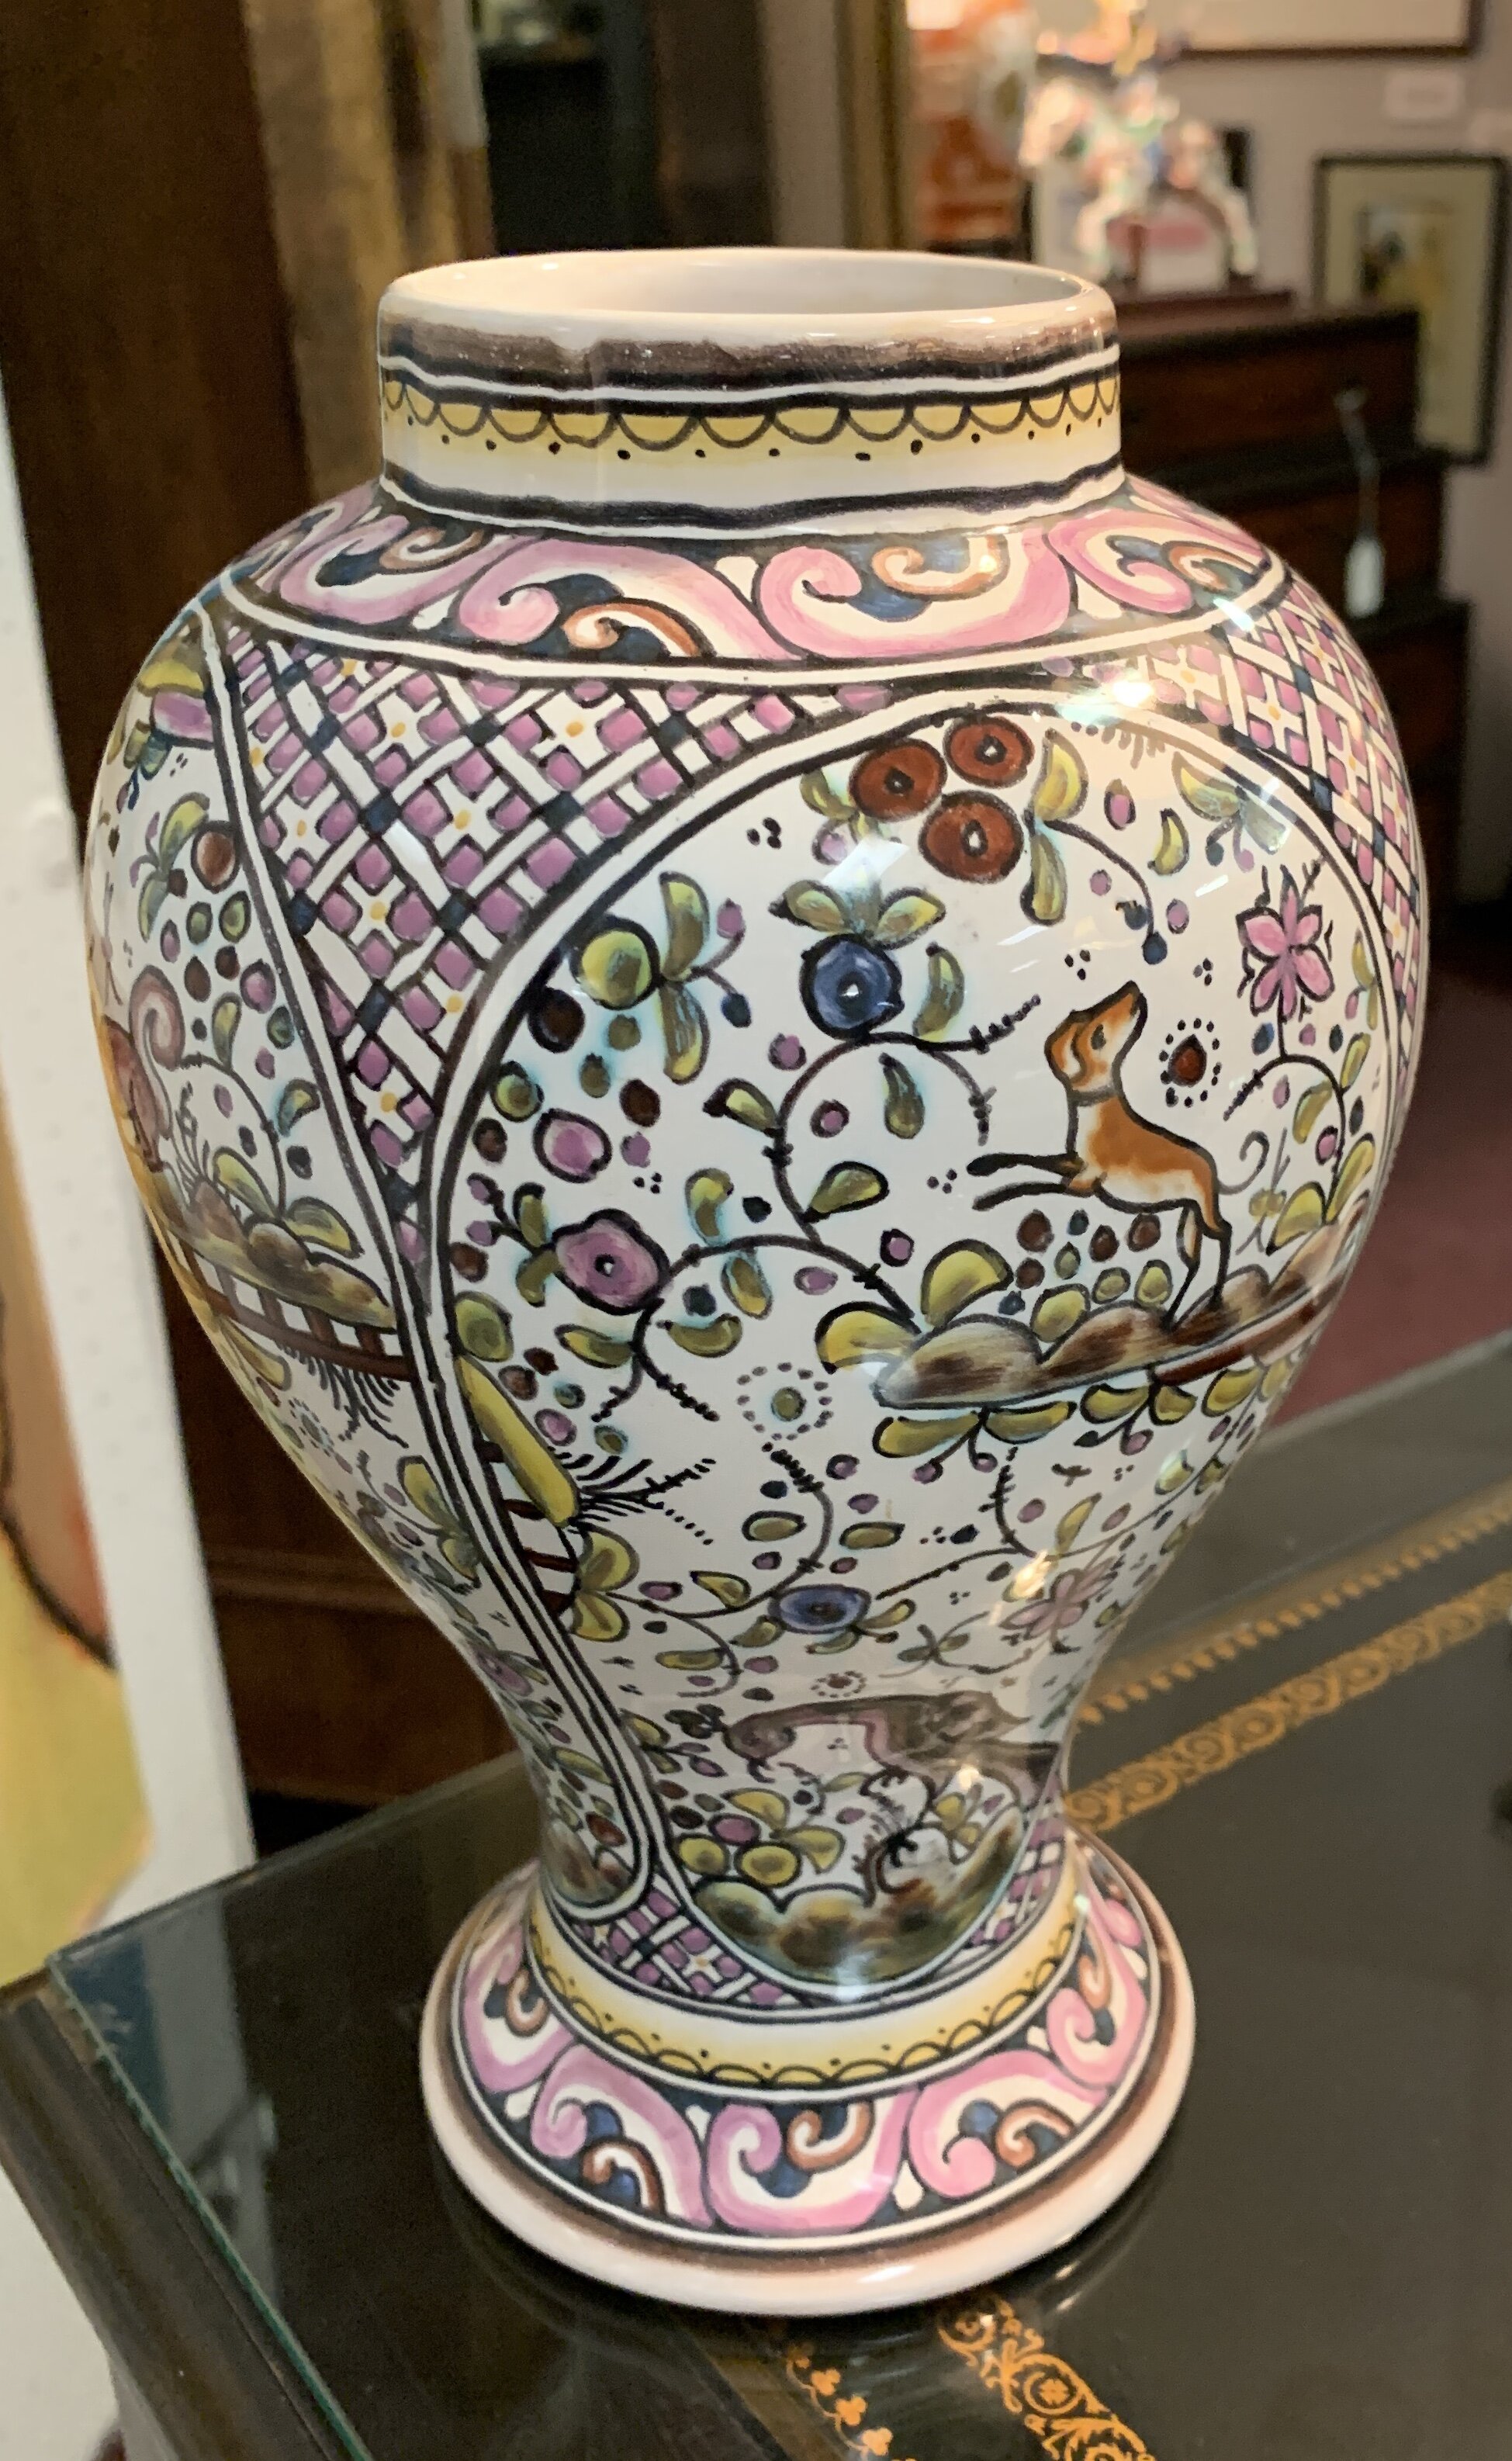 Portuguese Vase - $55